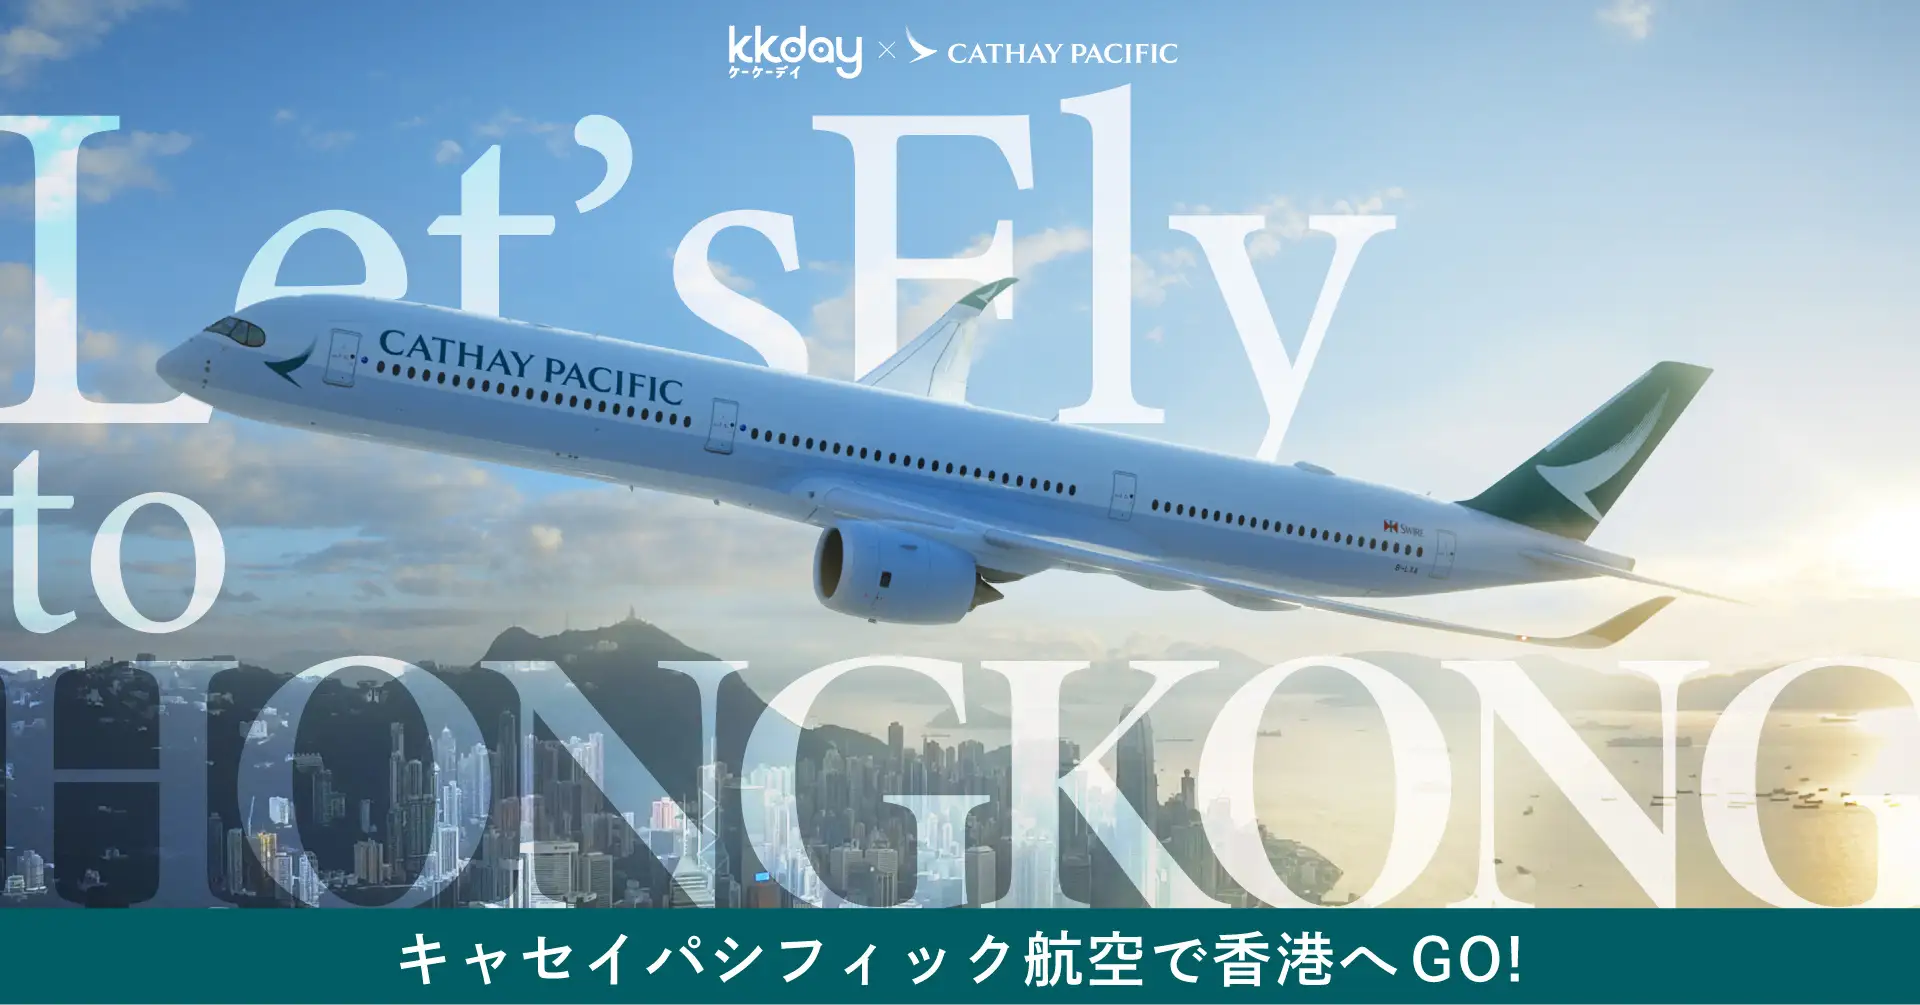 KKdayとキャセイパシフィックで秋冬の香港観光を盛り上げる共同キャンペーンを実施。アンケートに答えるだけで日本−香港往復ペア航空券が当たる